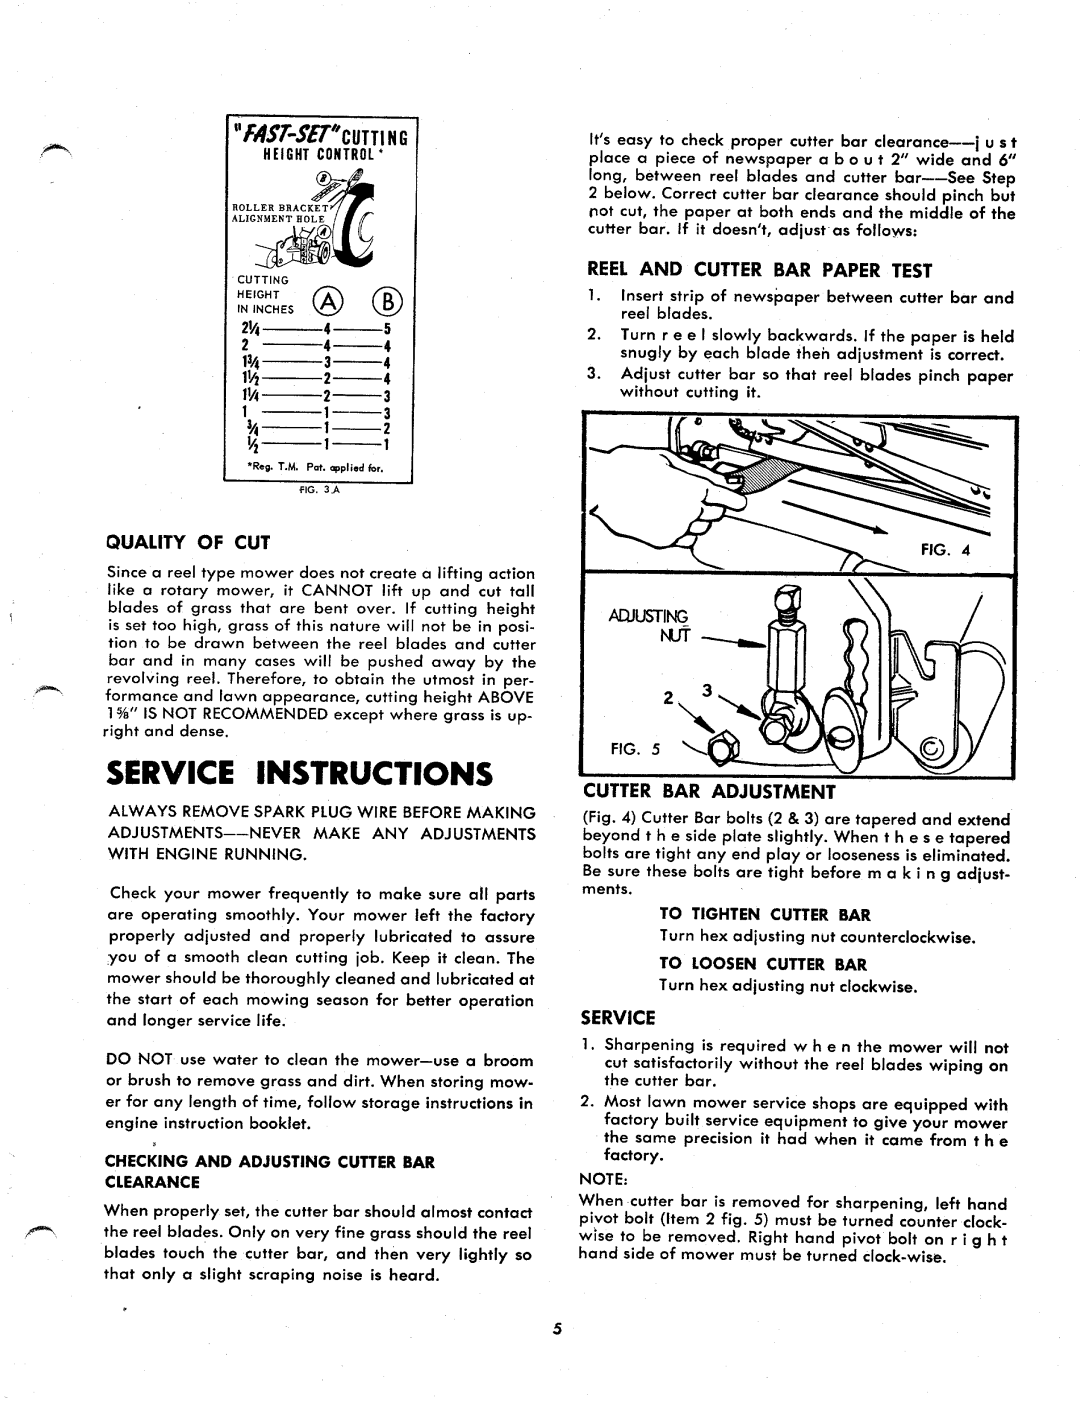 Yard-Man 1050-5 manual 